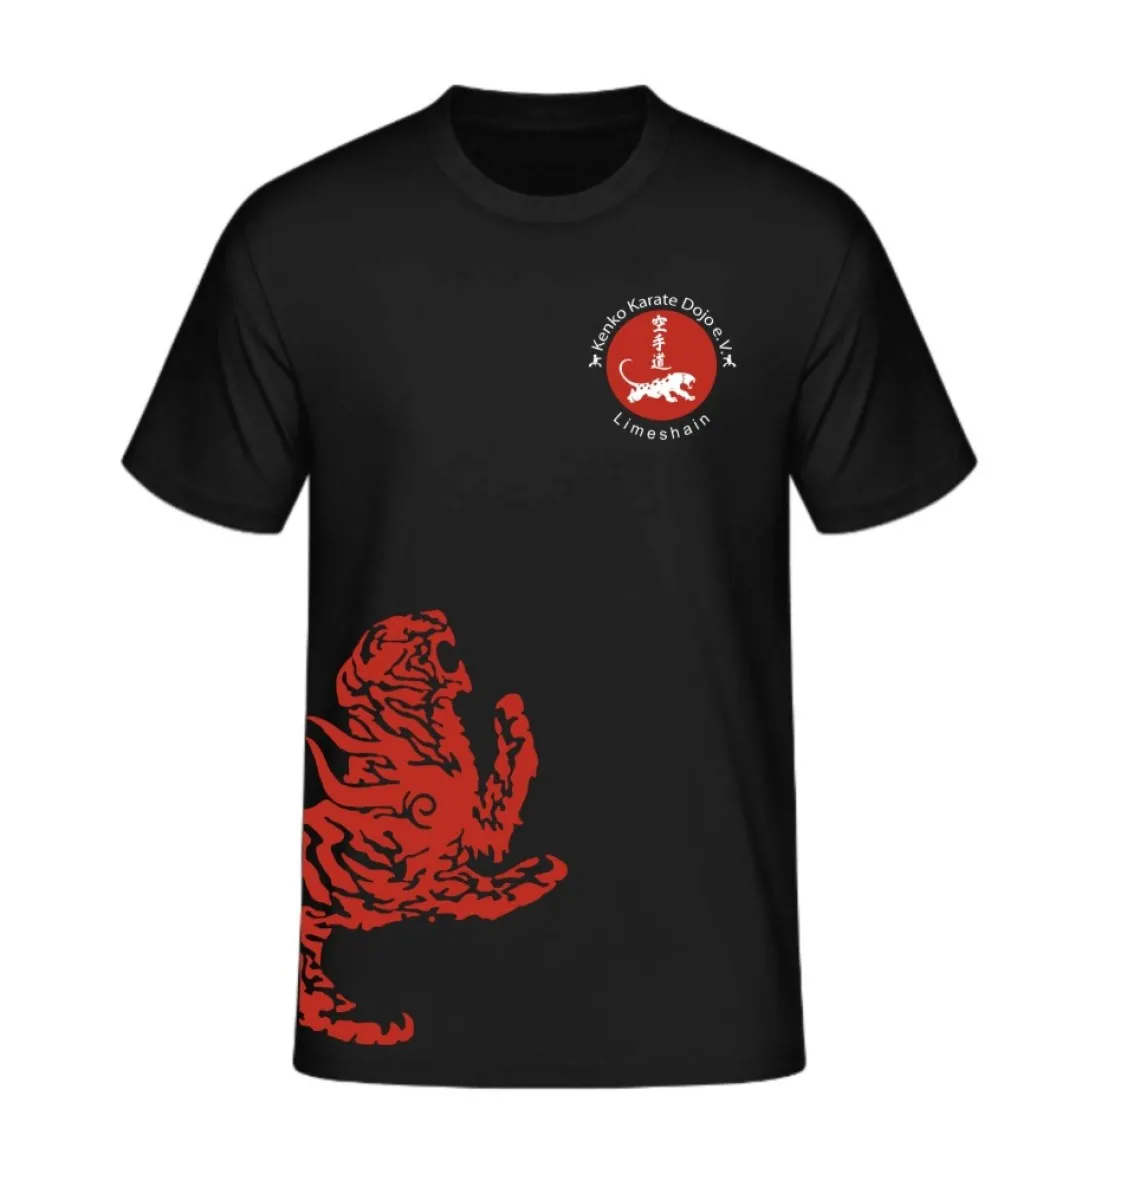 T-Shirt Kenko Karate Dojo Limeshain schwarz vorne